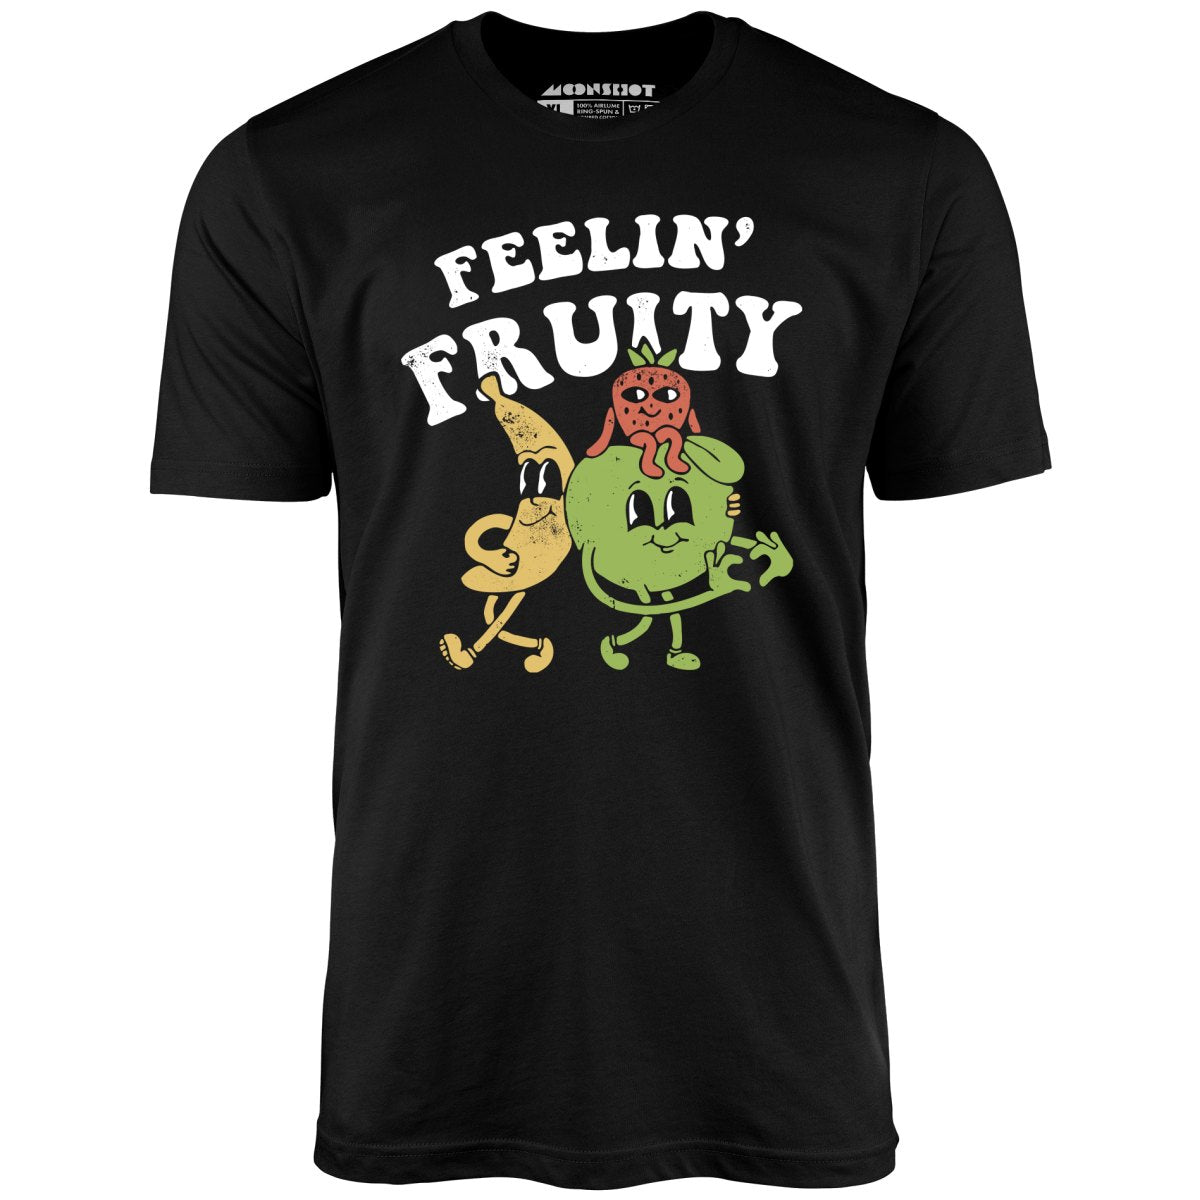 Feelin' Fruity - Unisex T-Shirt